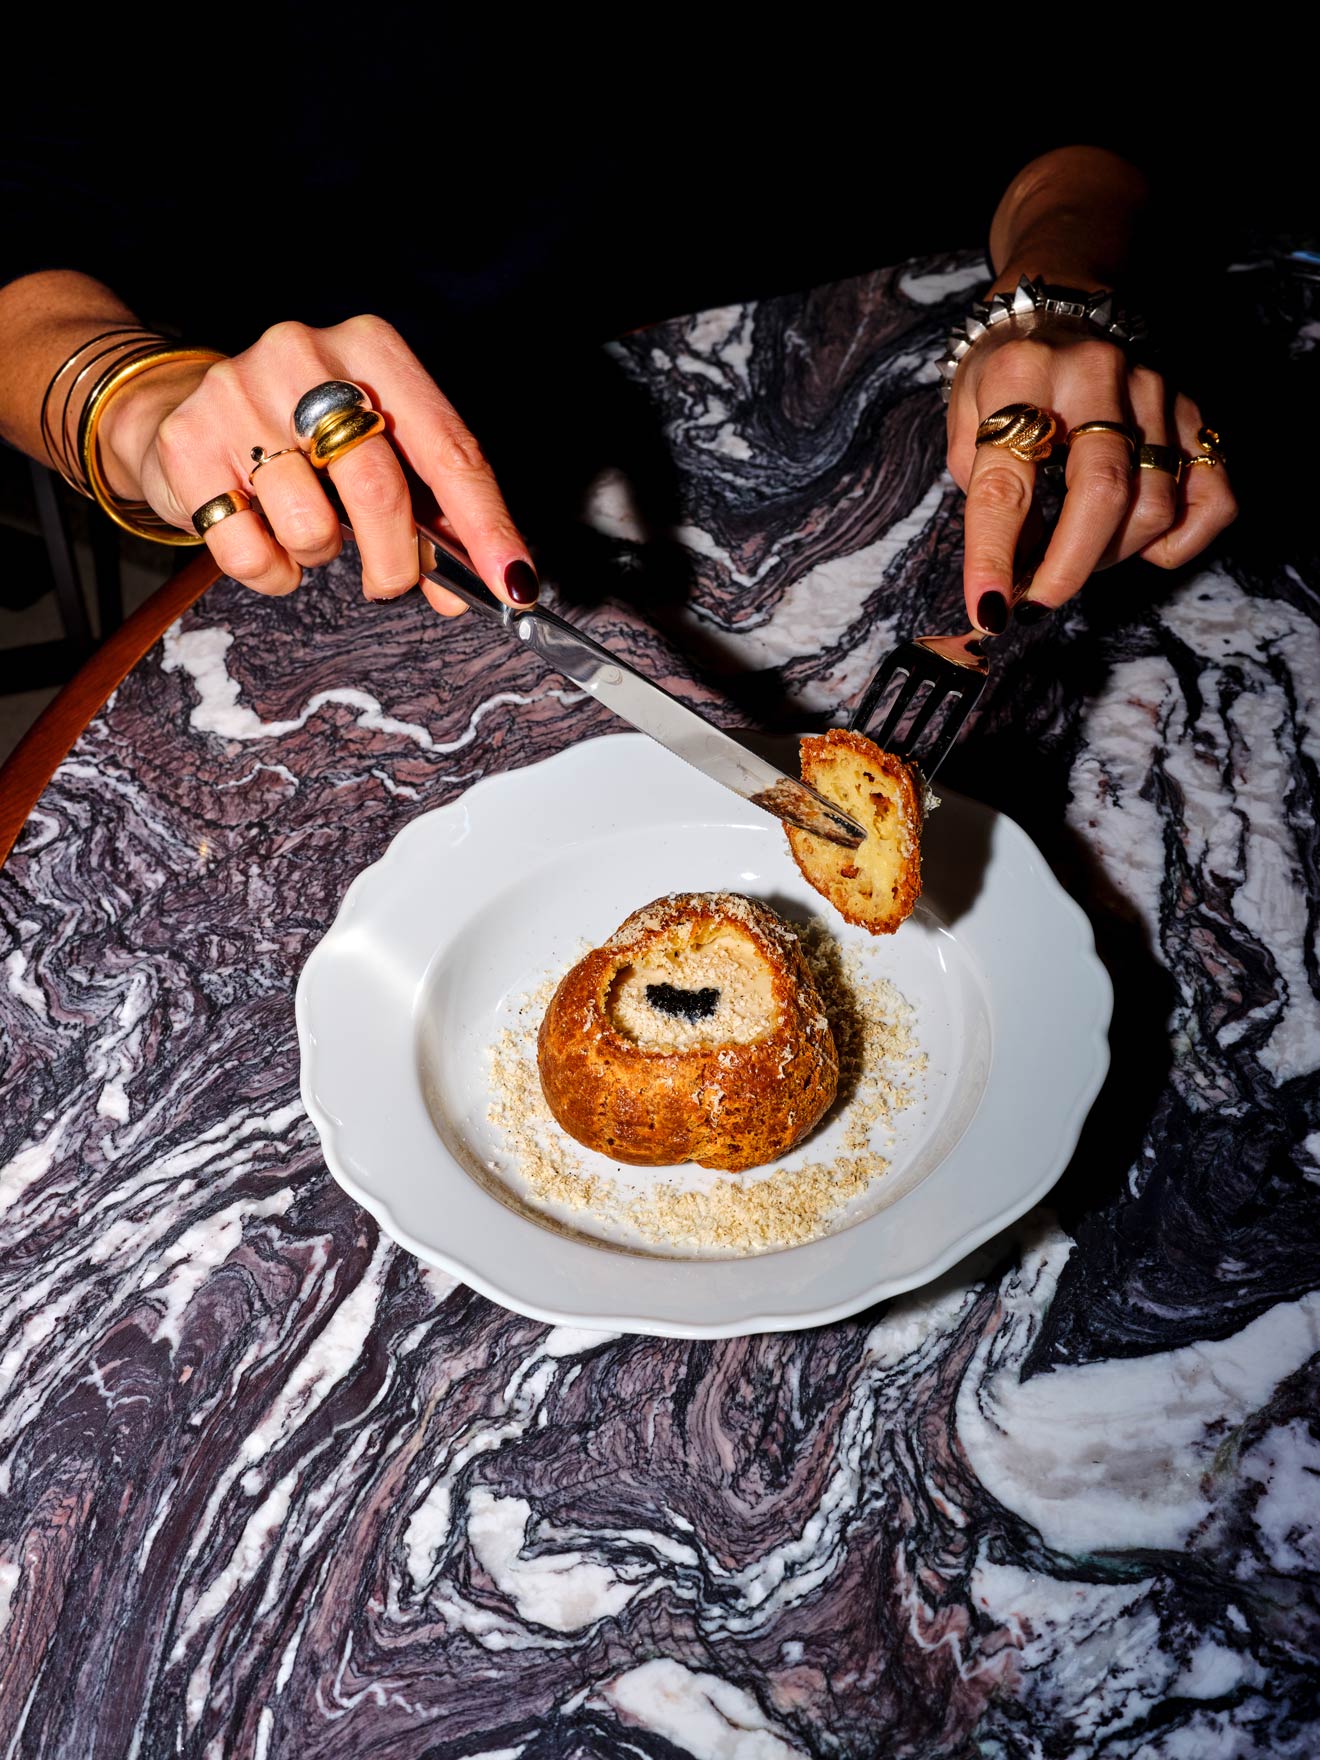 Woman cutting into a breaded dessert